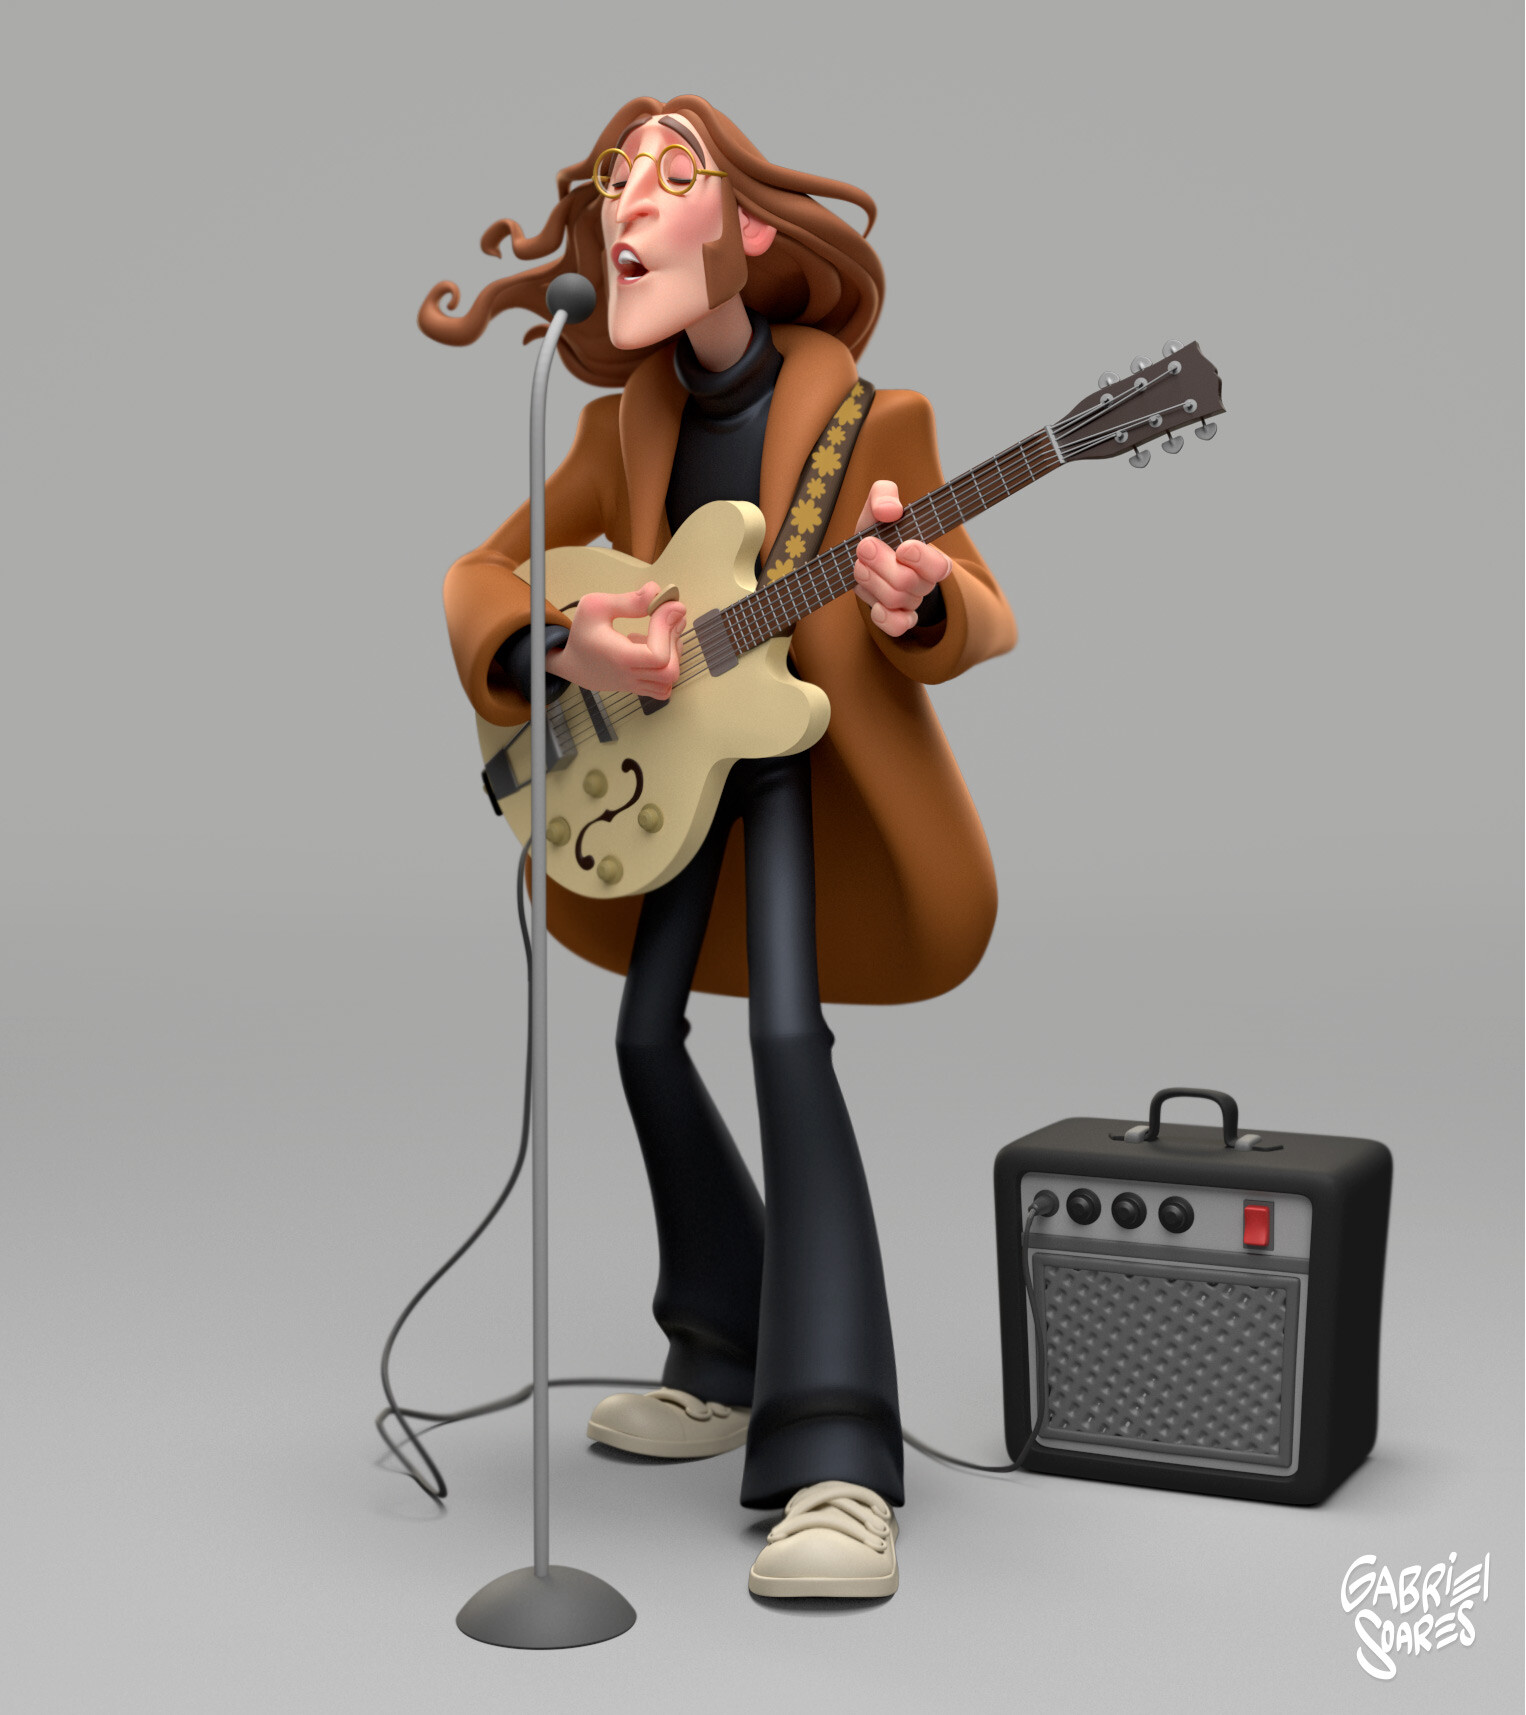 Artwork Digital Art Gabriel Soares John Lennon Guitar Musical Instrument Microphone Glasses 1526x1715